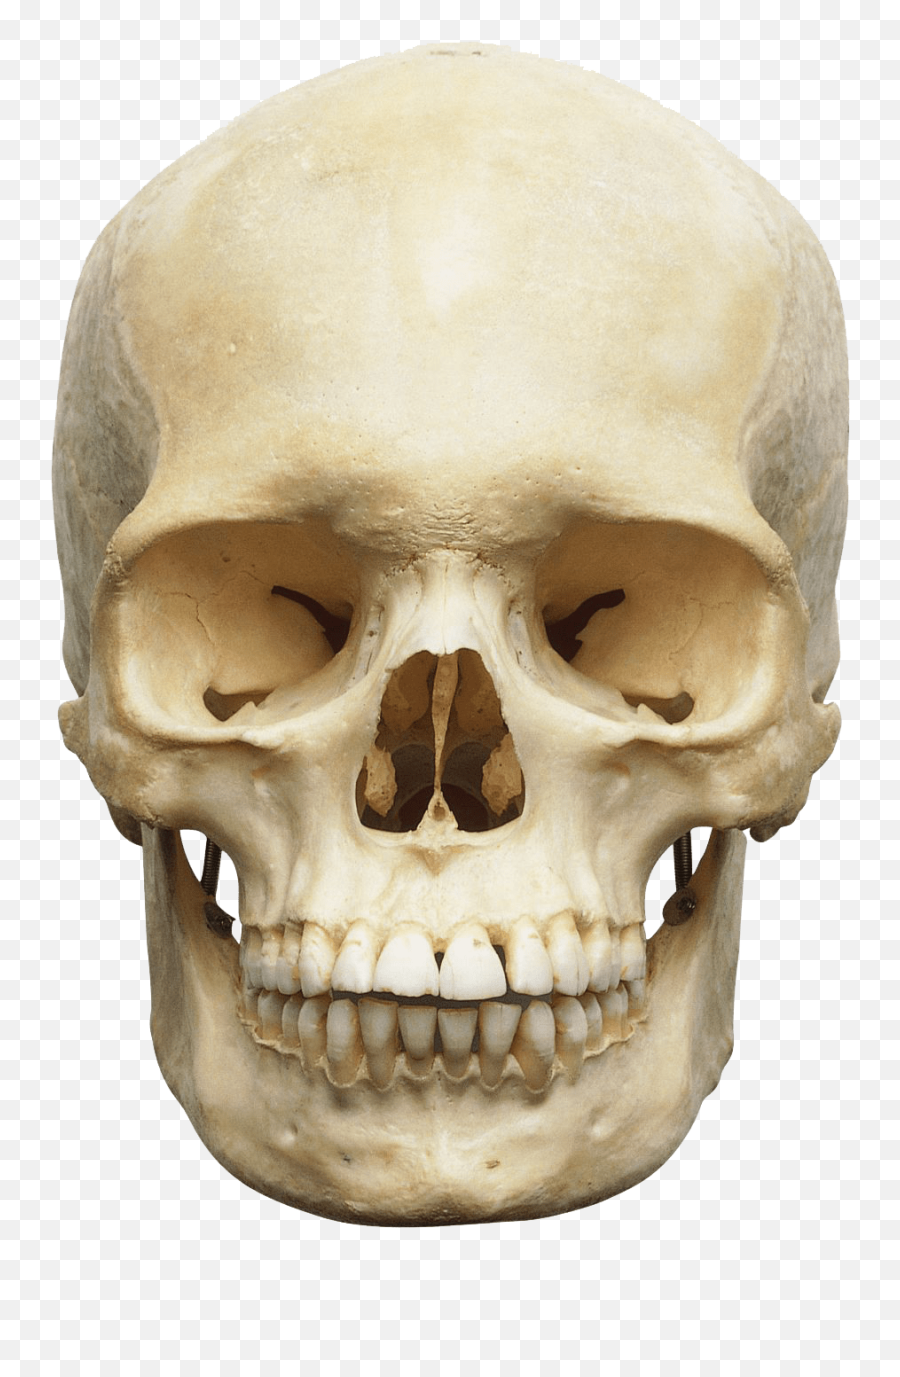 Skull Png Images Free Download - Human Skull For Kids,Skull And Bones Png